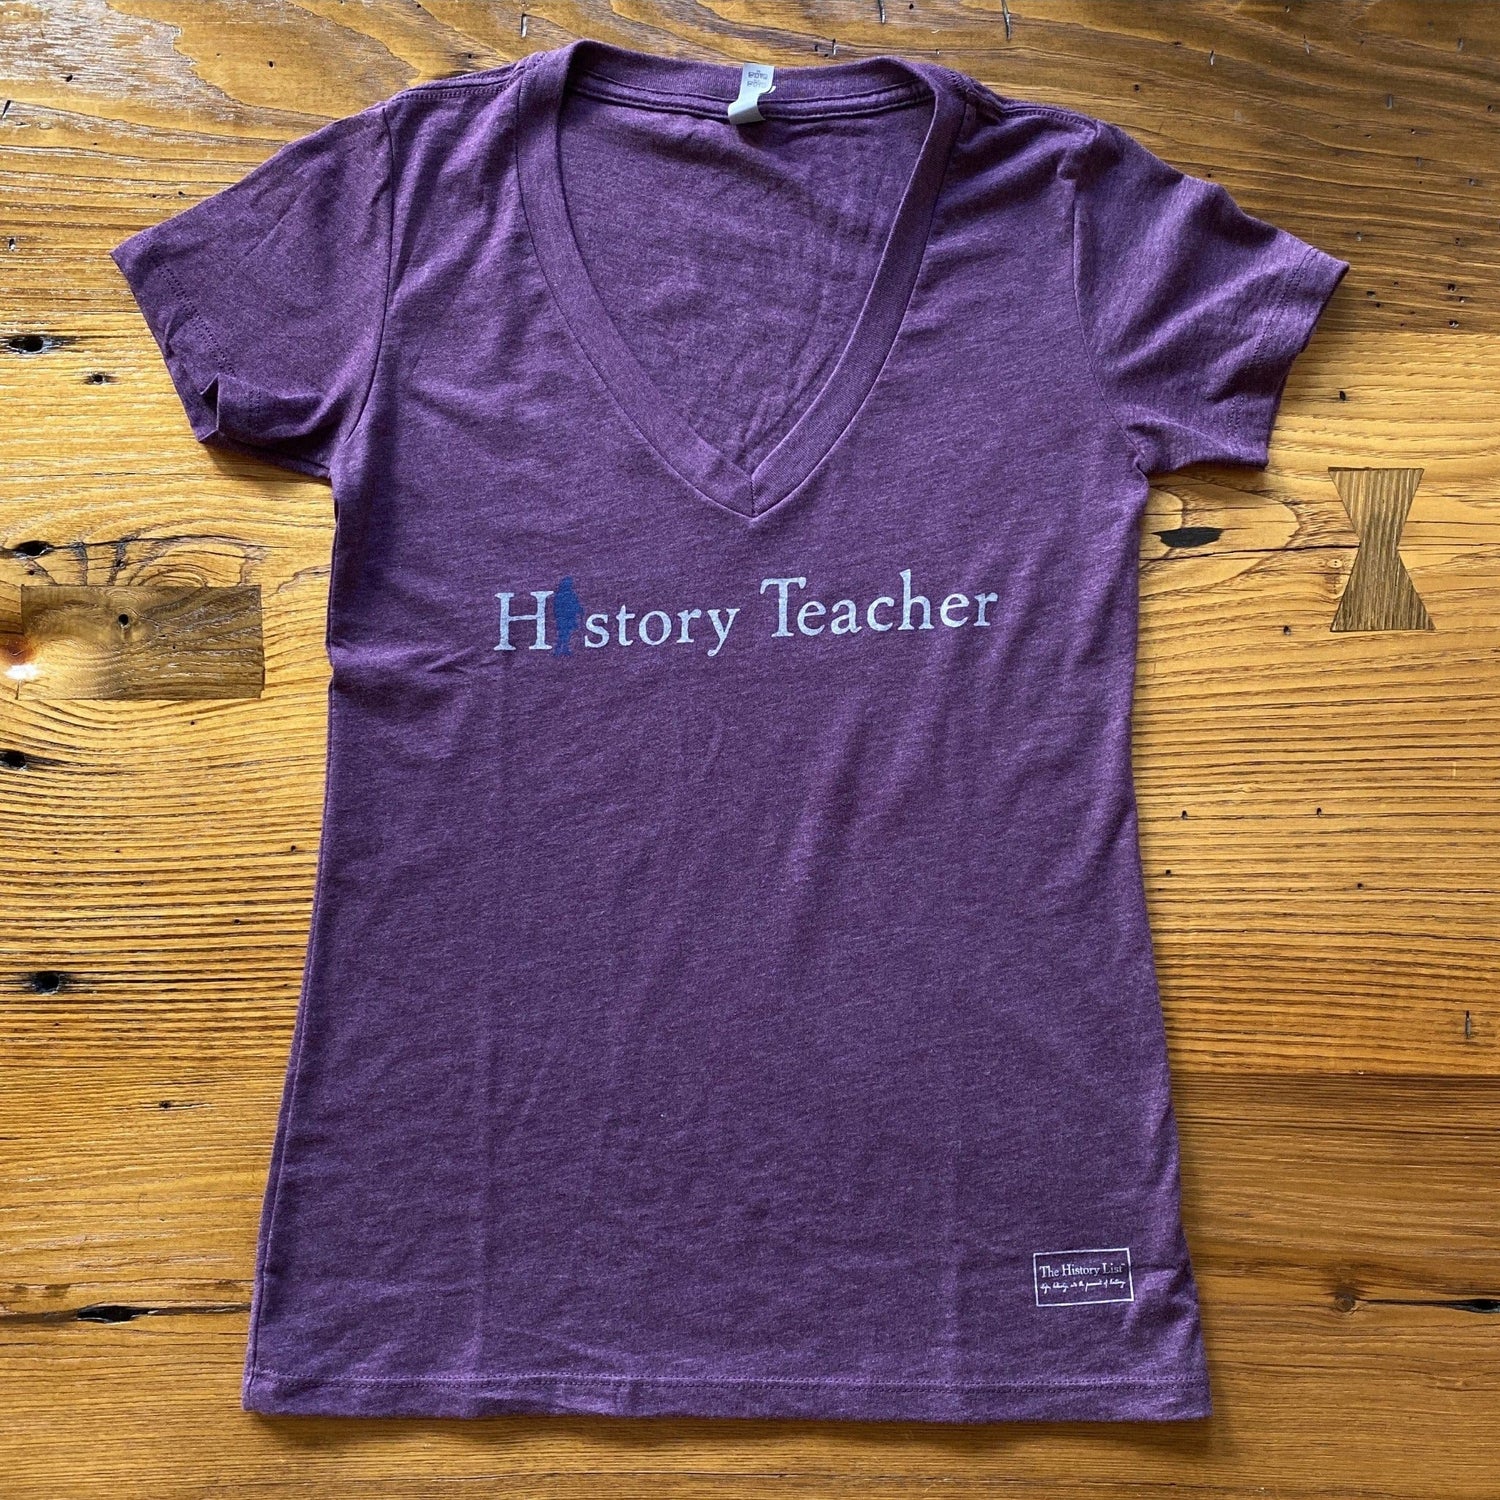 "History Teacher" shirts